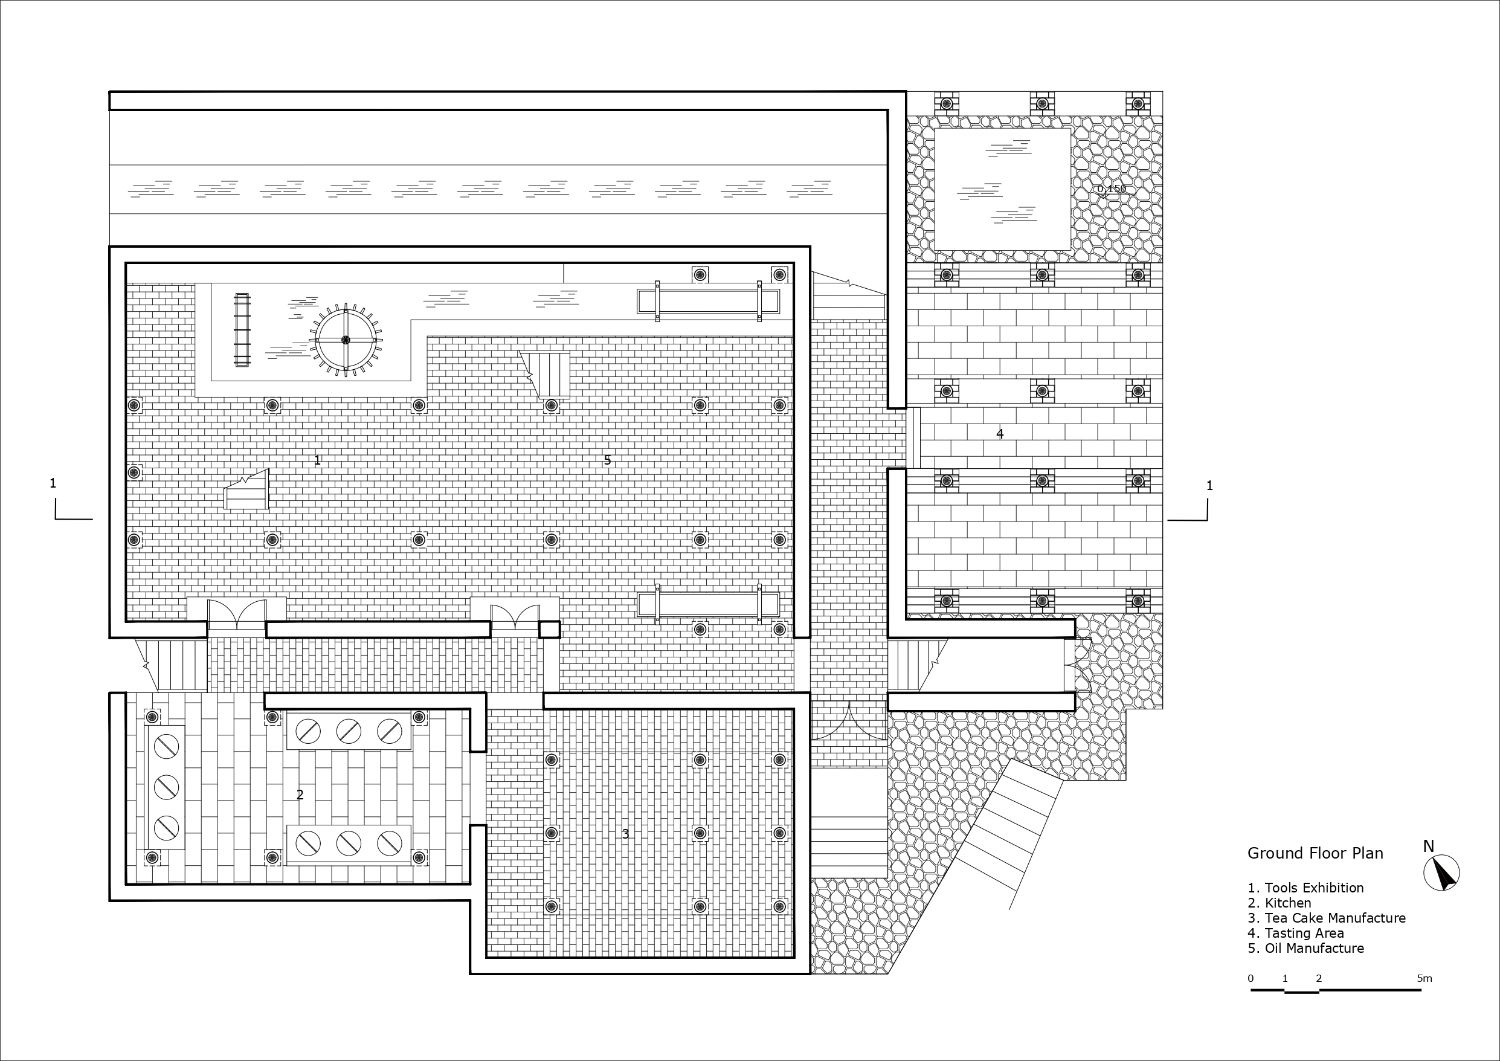 Ground floor plan drawing of Camellia Oil Workshop